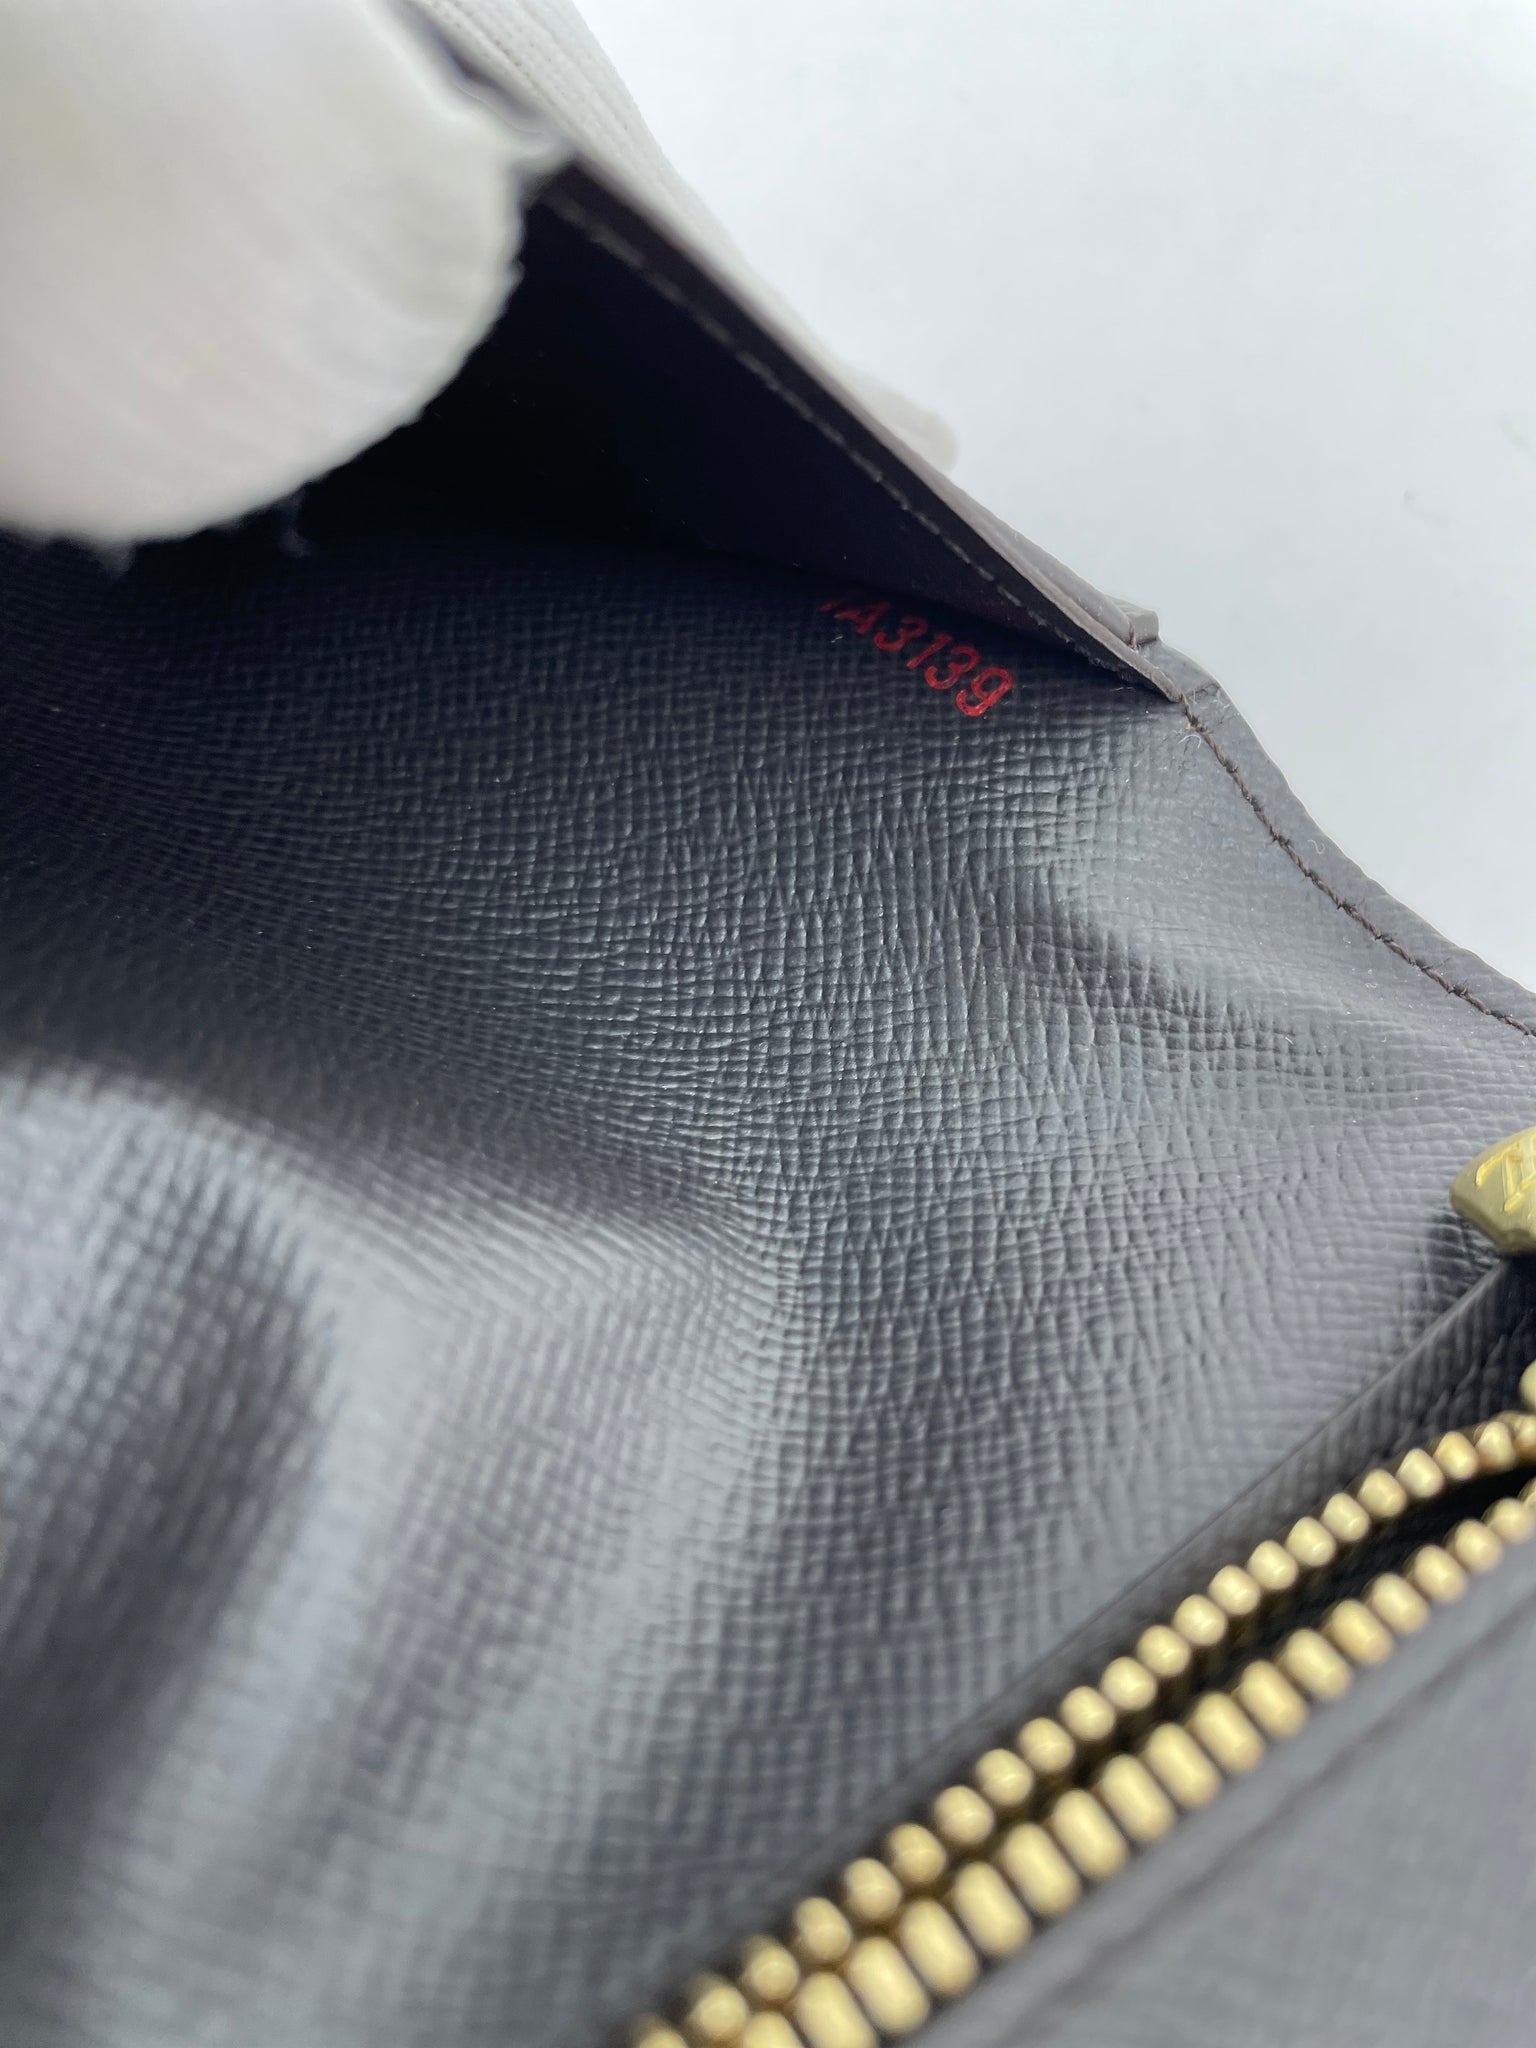 Louis Vuitton Blue Epi leather Brazza Bifold Long Wallet – I MISS YOU  VINTAGE